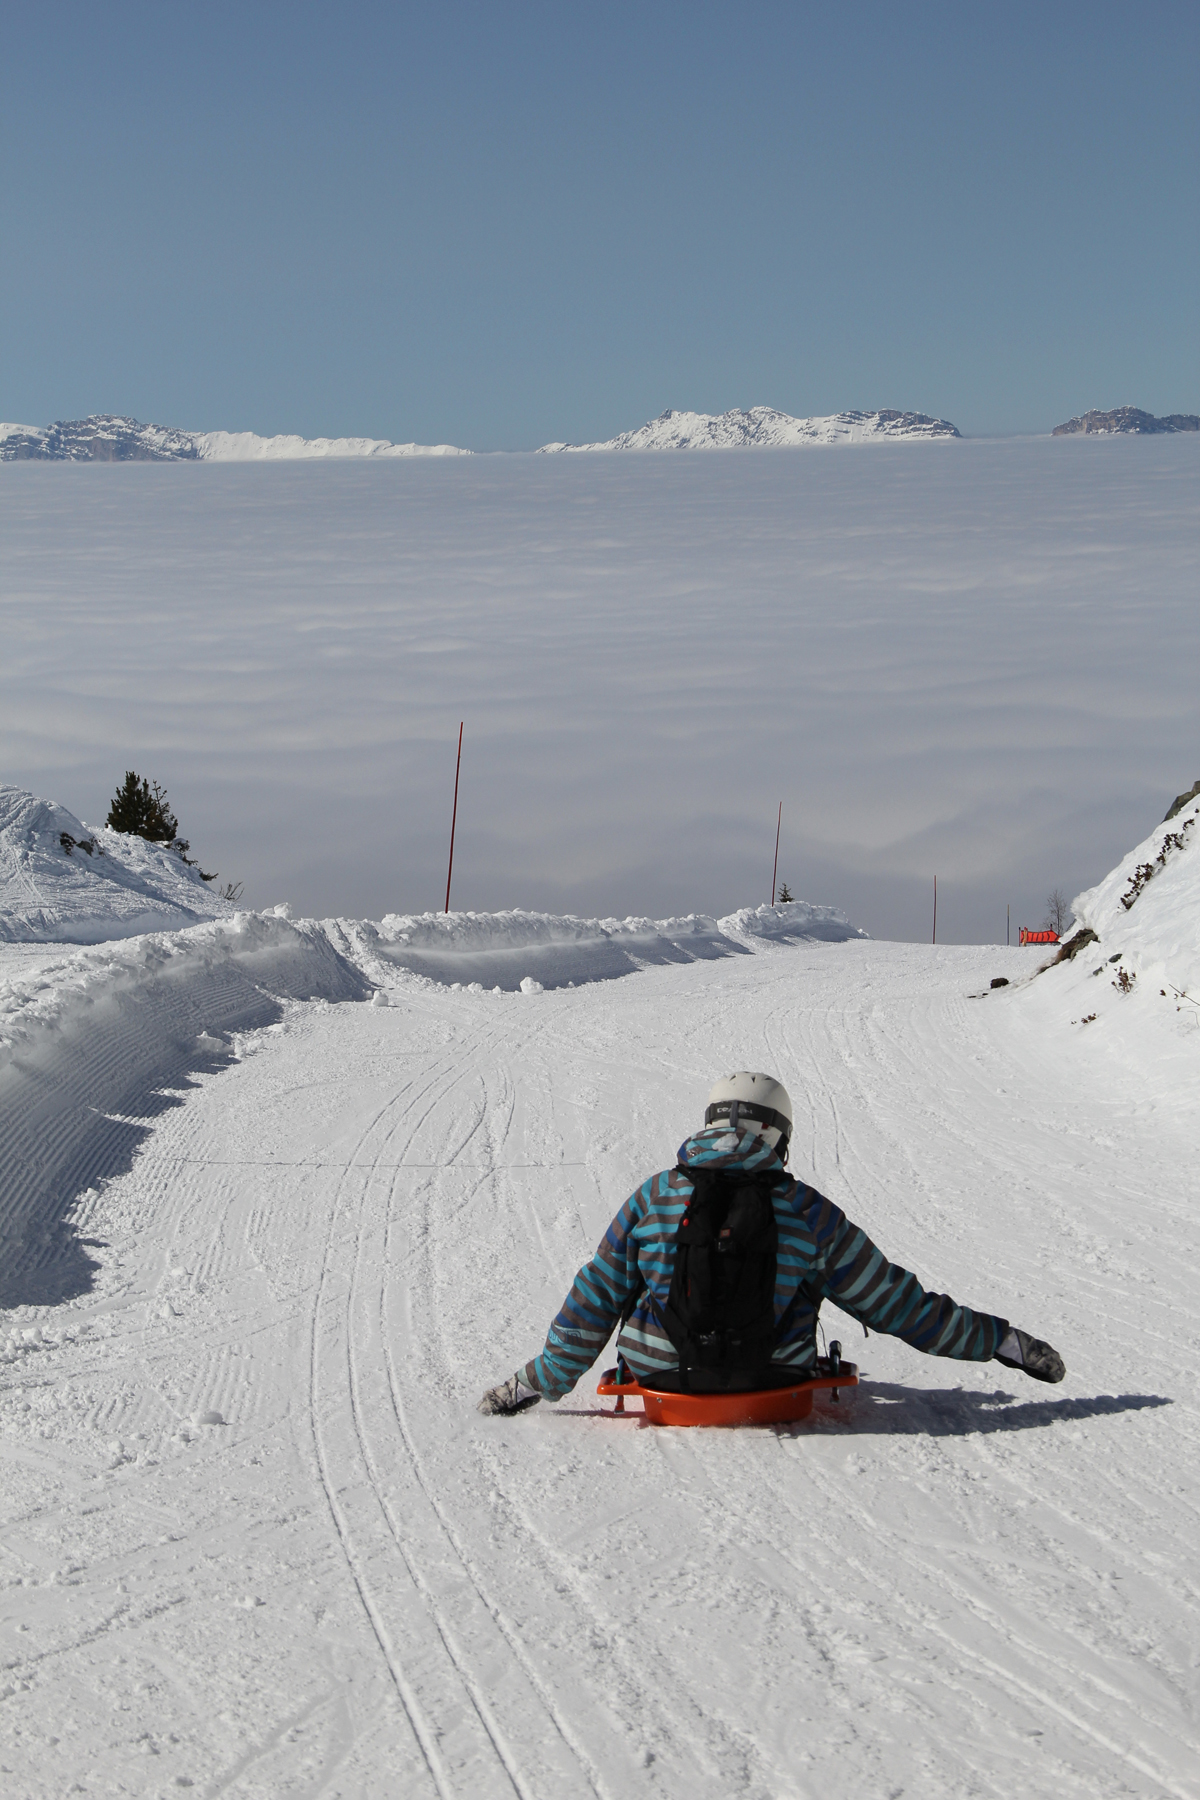 Chamrousse blog expérience test luge park station ski montagne isère alpes france - © MG - OT Chamrousse